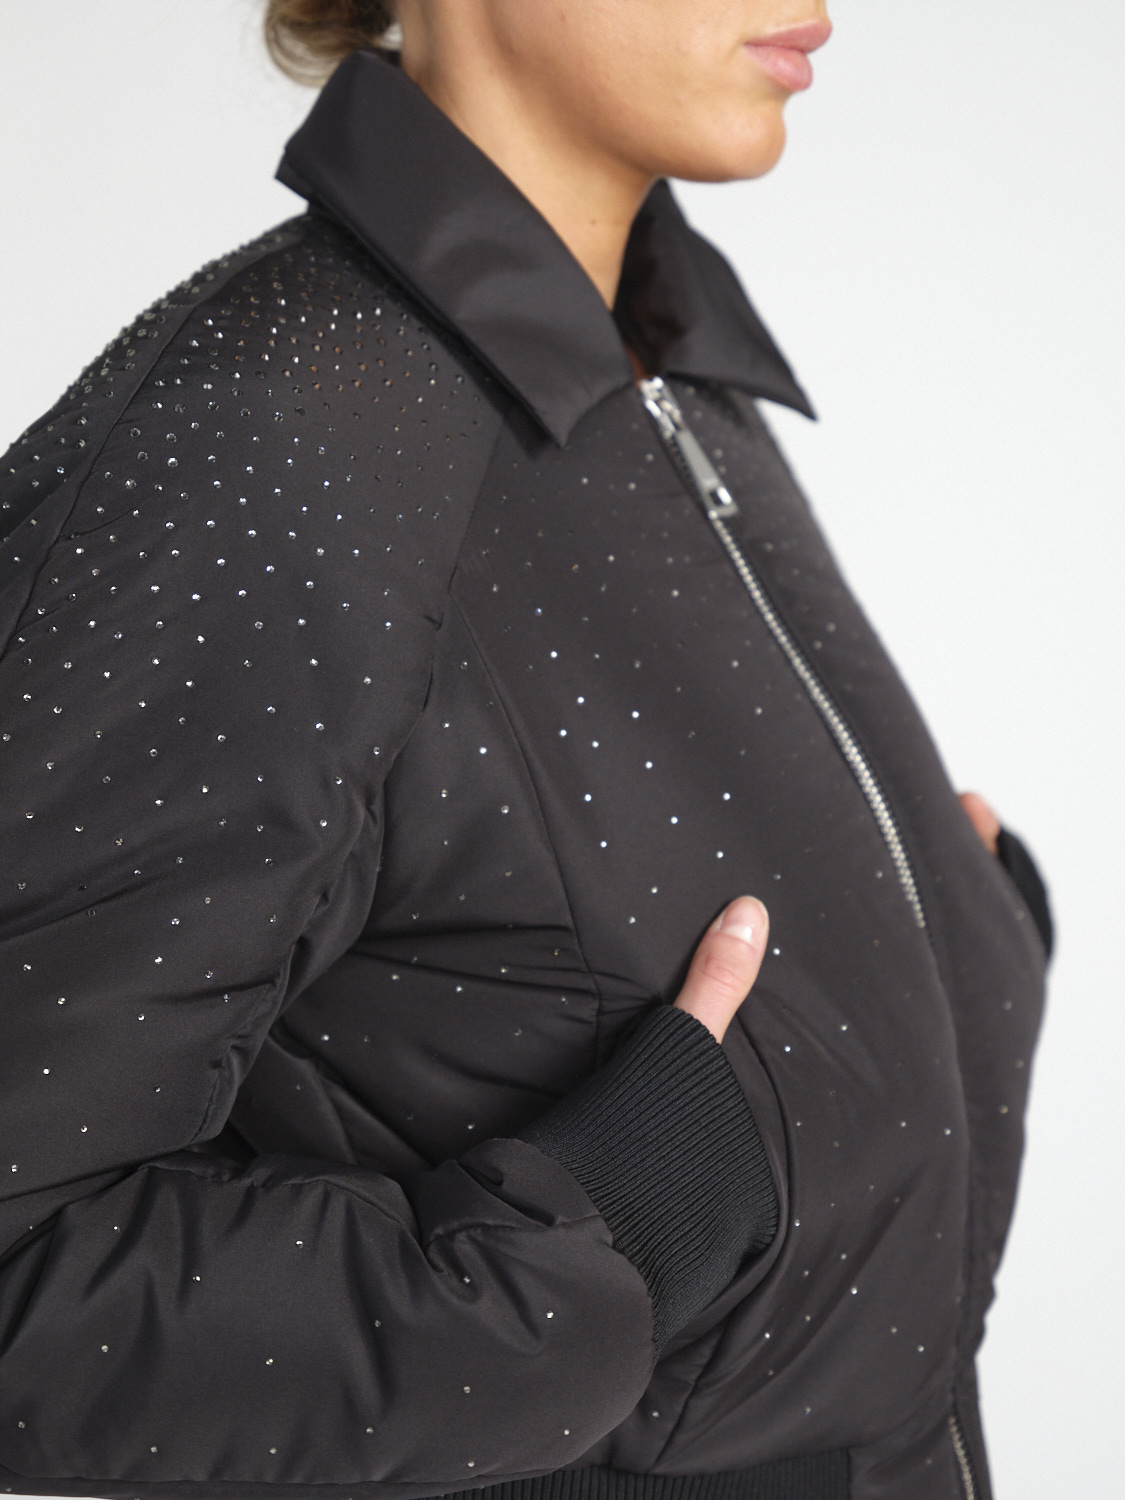 khrisjoy Jim - Short bomber jacket with glitter details   black XS/S